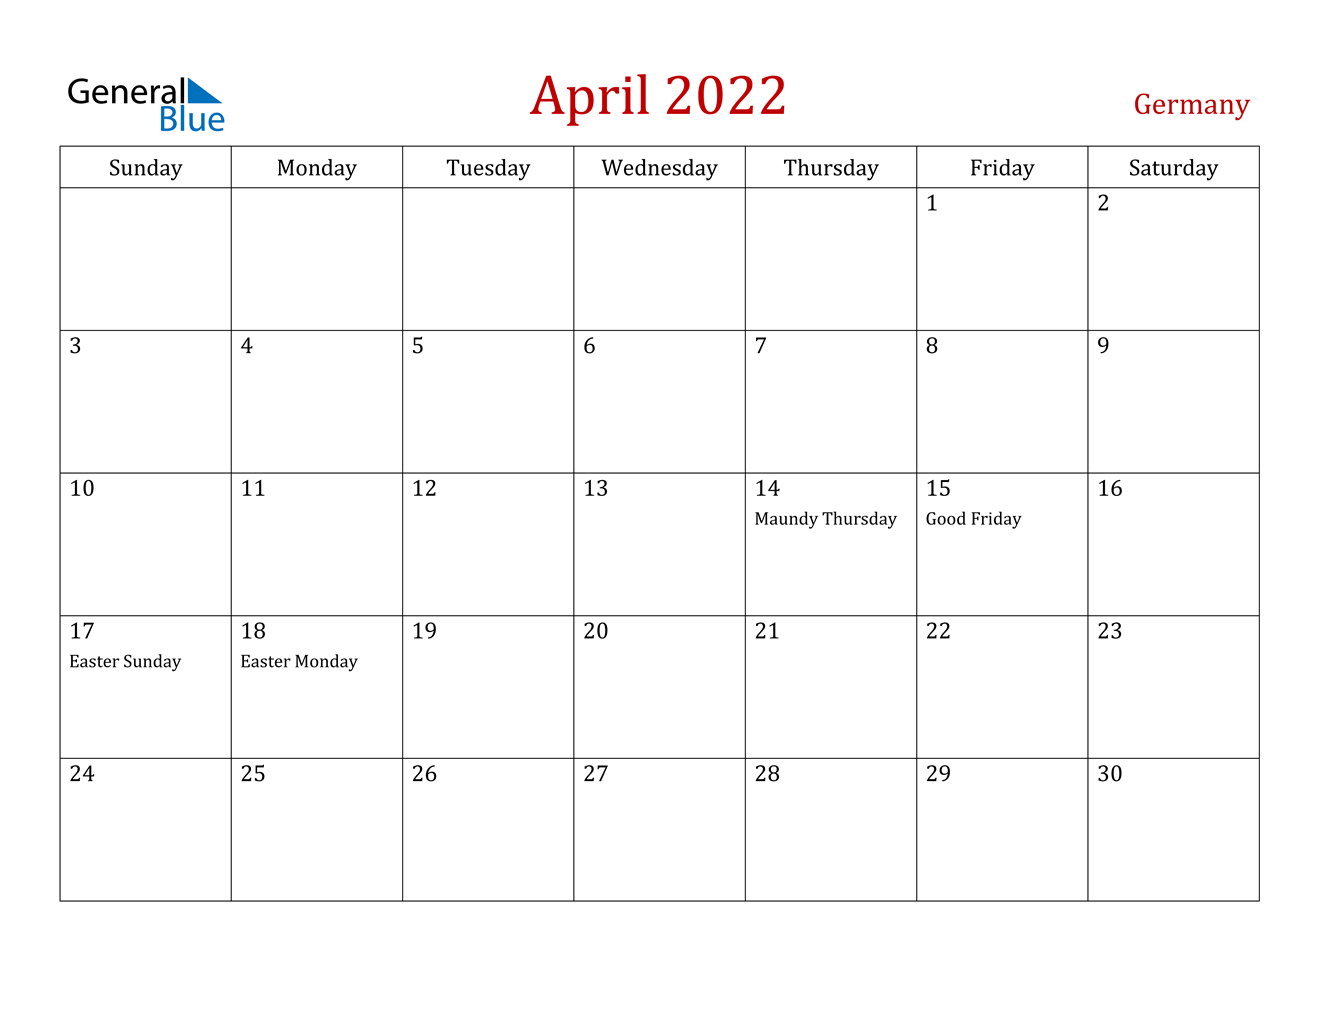 April 2022 Calendar - Germany